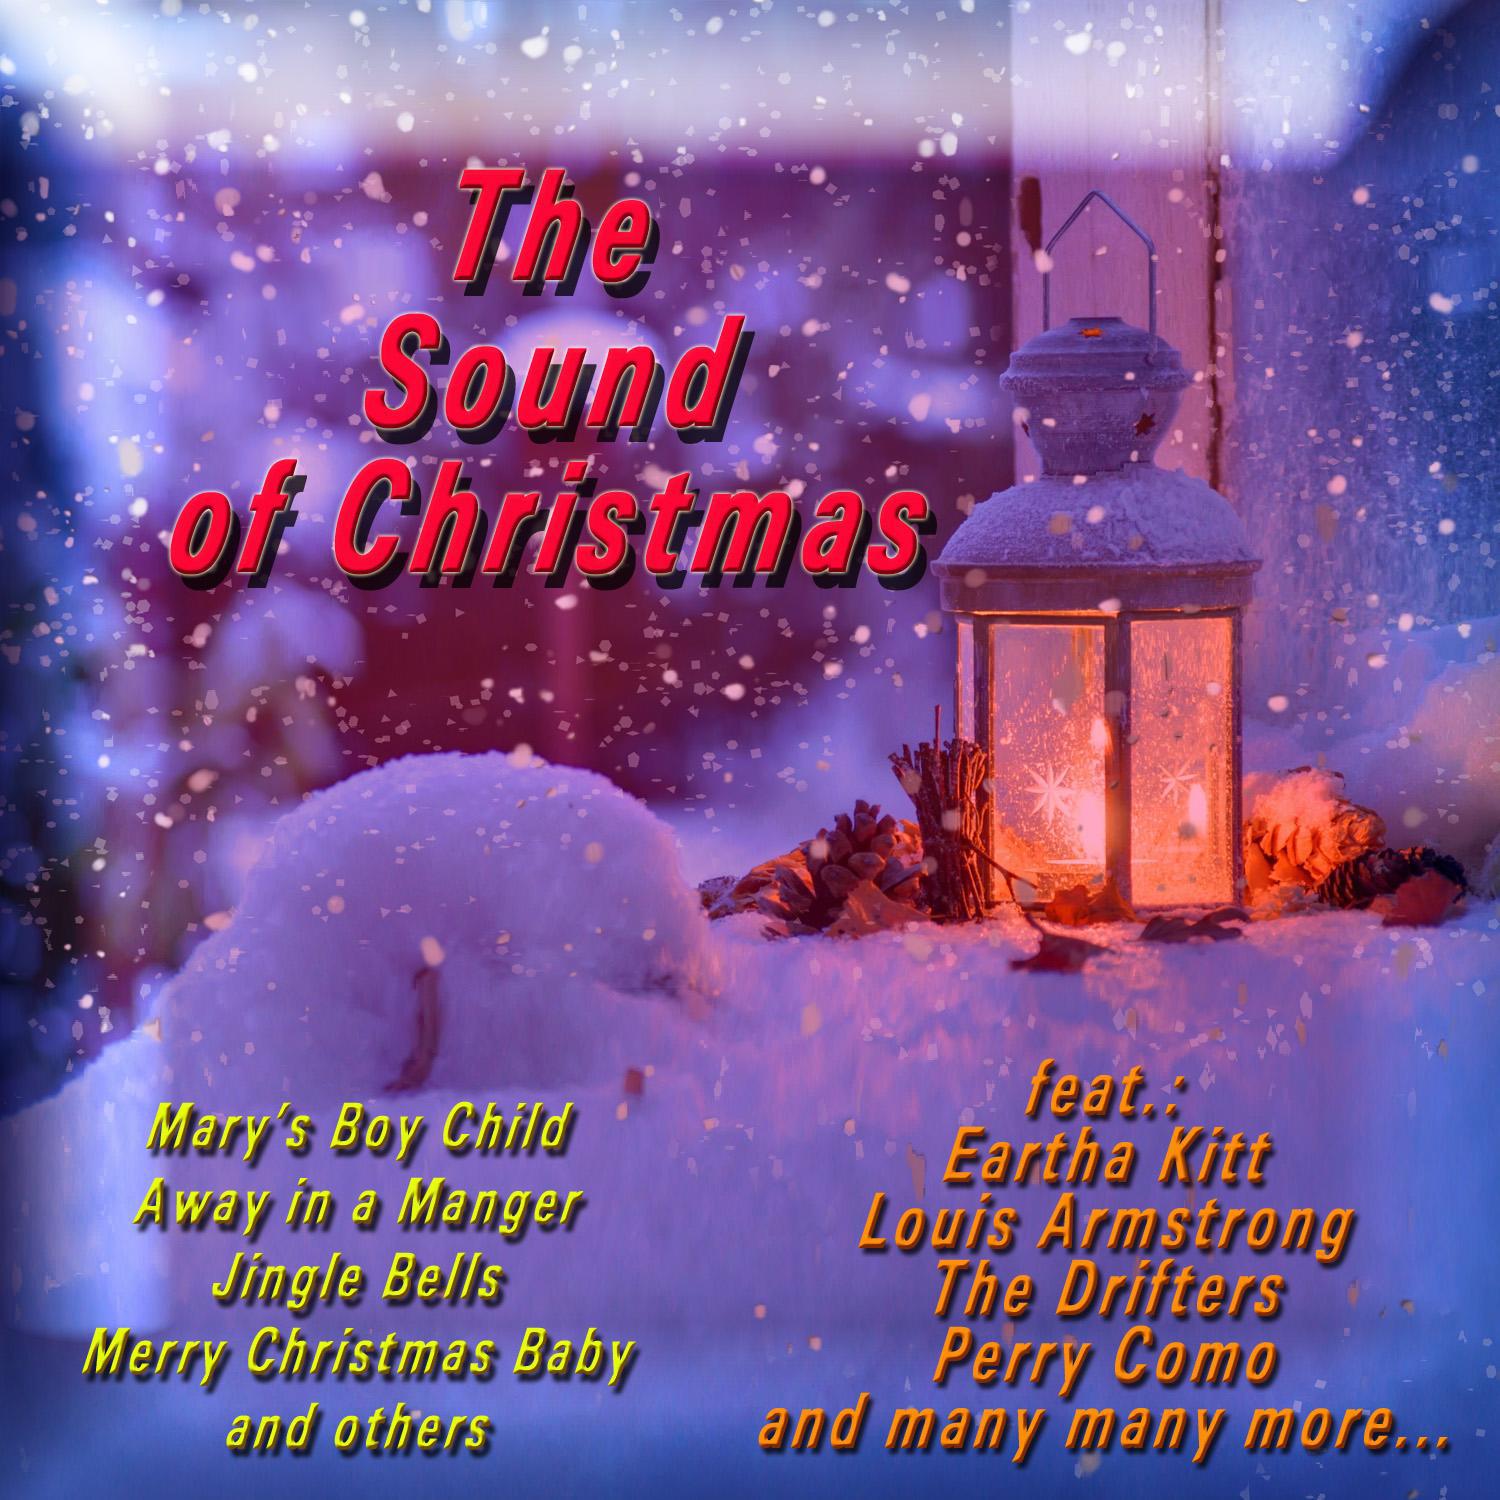 The Sound of Christmas